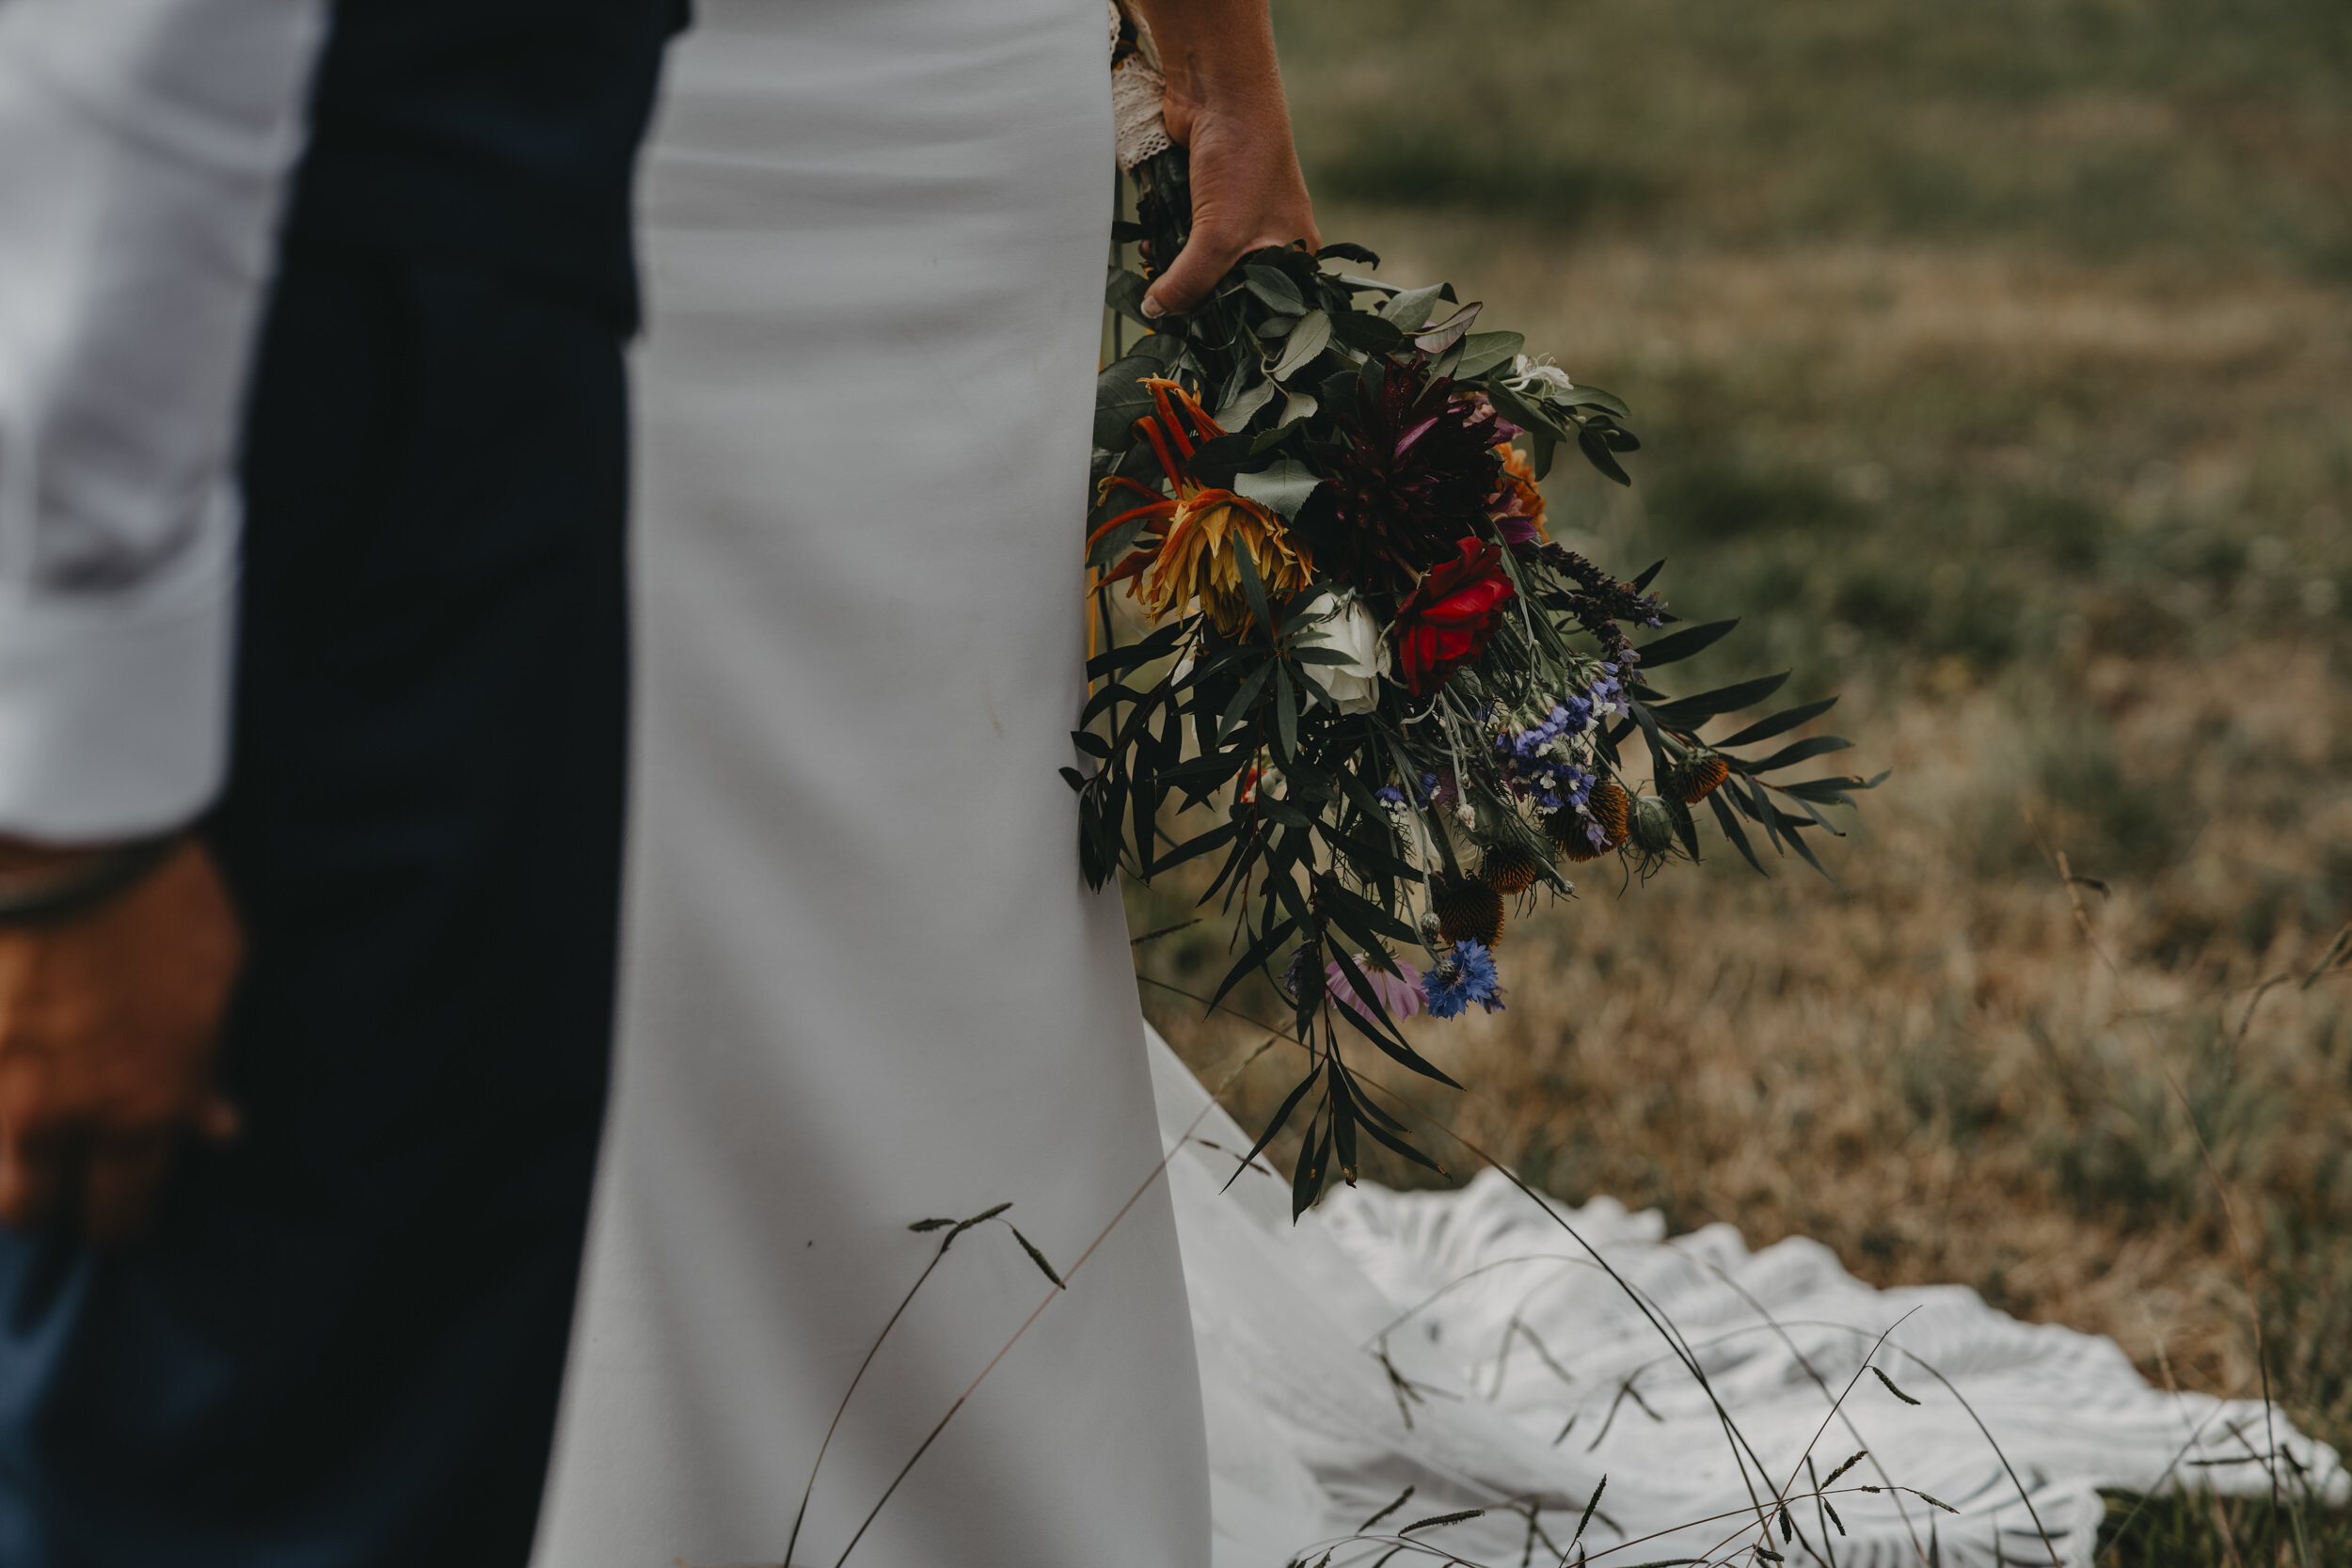 Auckland Wedding Photographer | Auckland Wedding Videographer | DIY Wedding | AucklandPhotographer | Auckland Wedding Venue 